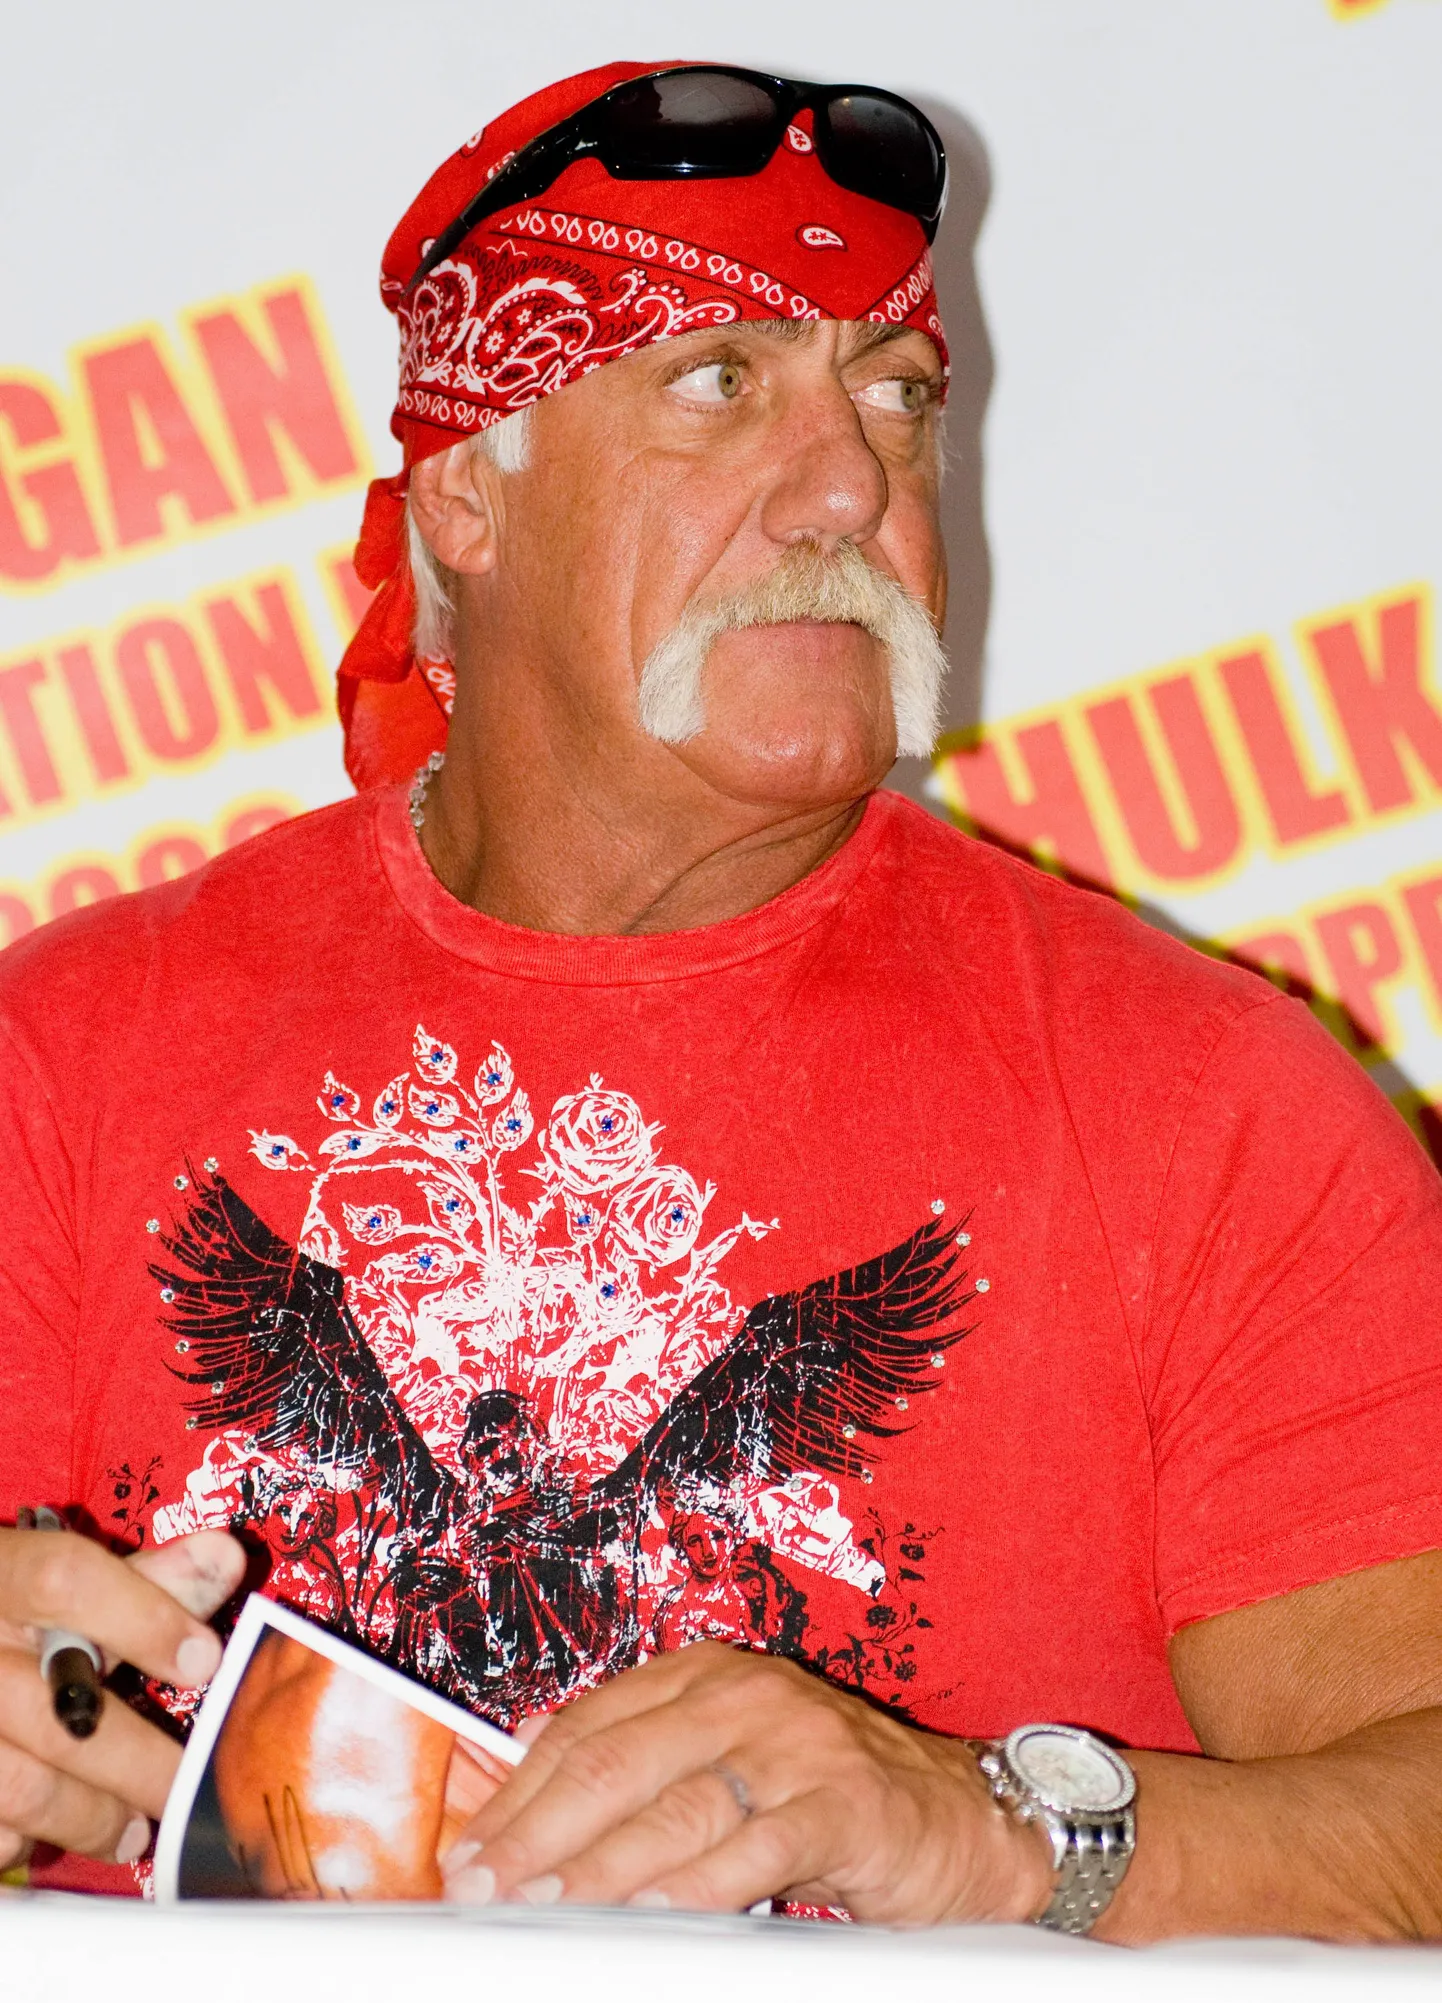 Hulk Hogan pictured